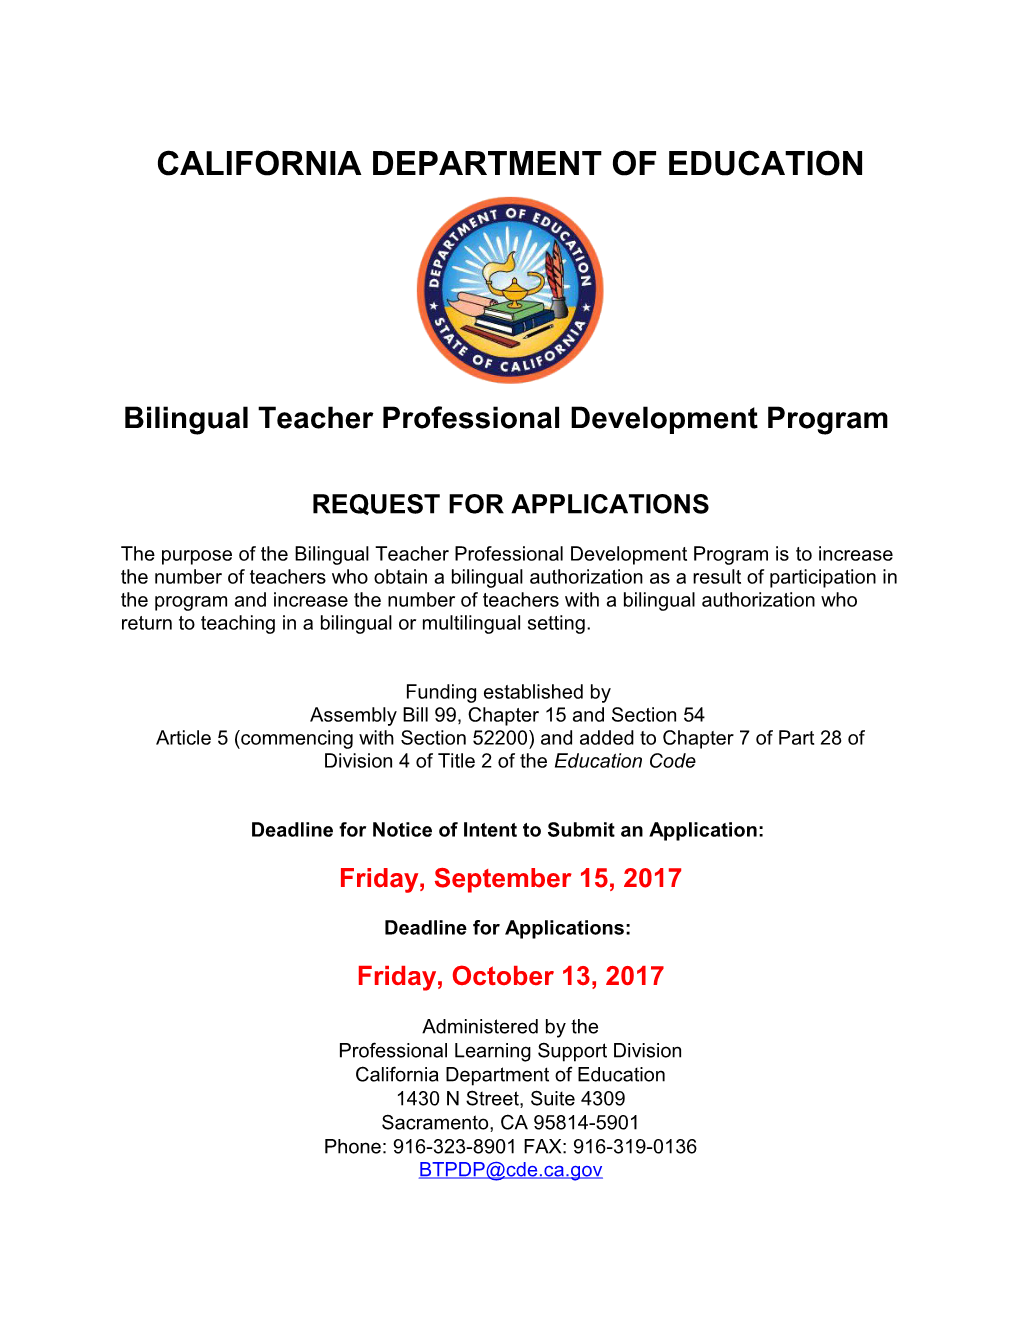 RFA BTPDP - Funding (CA Dept of Education)